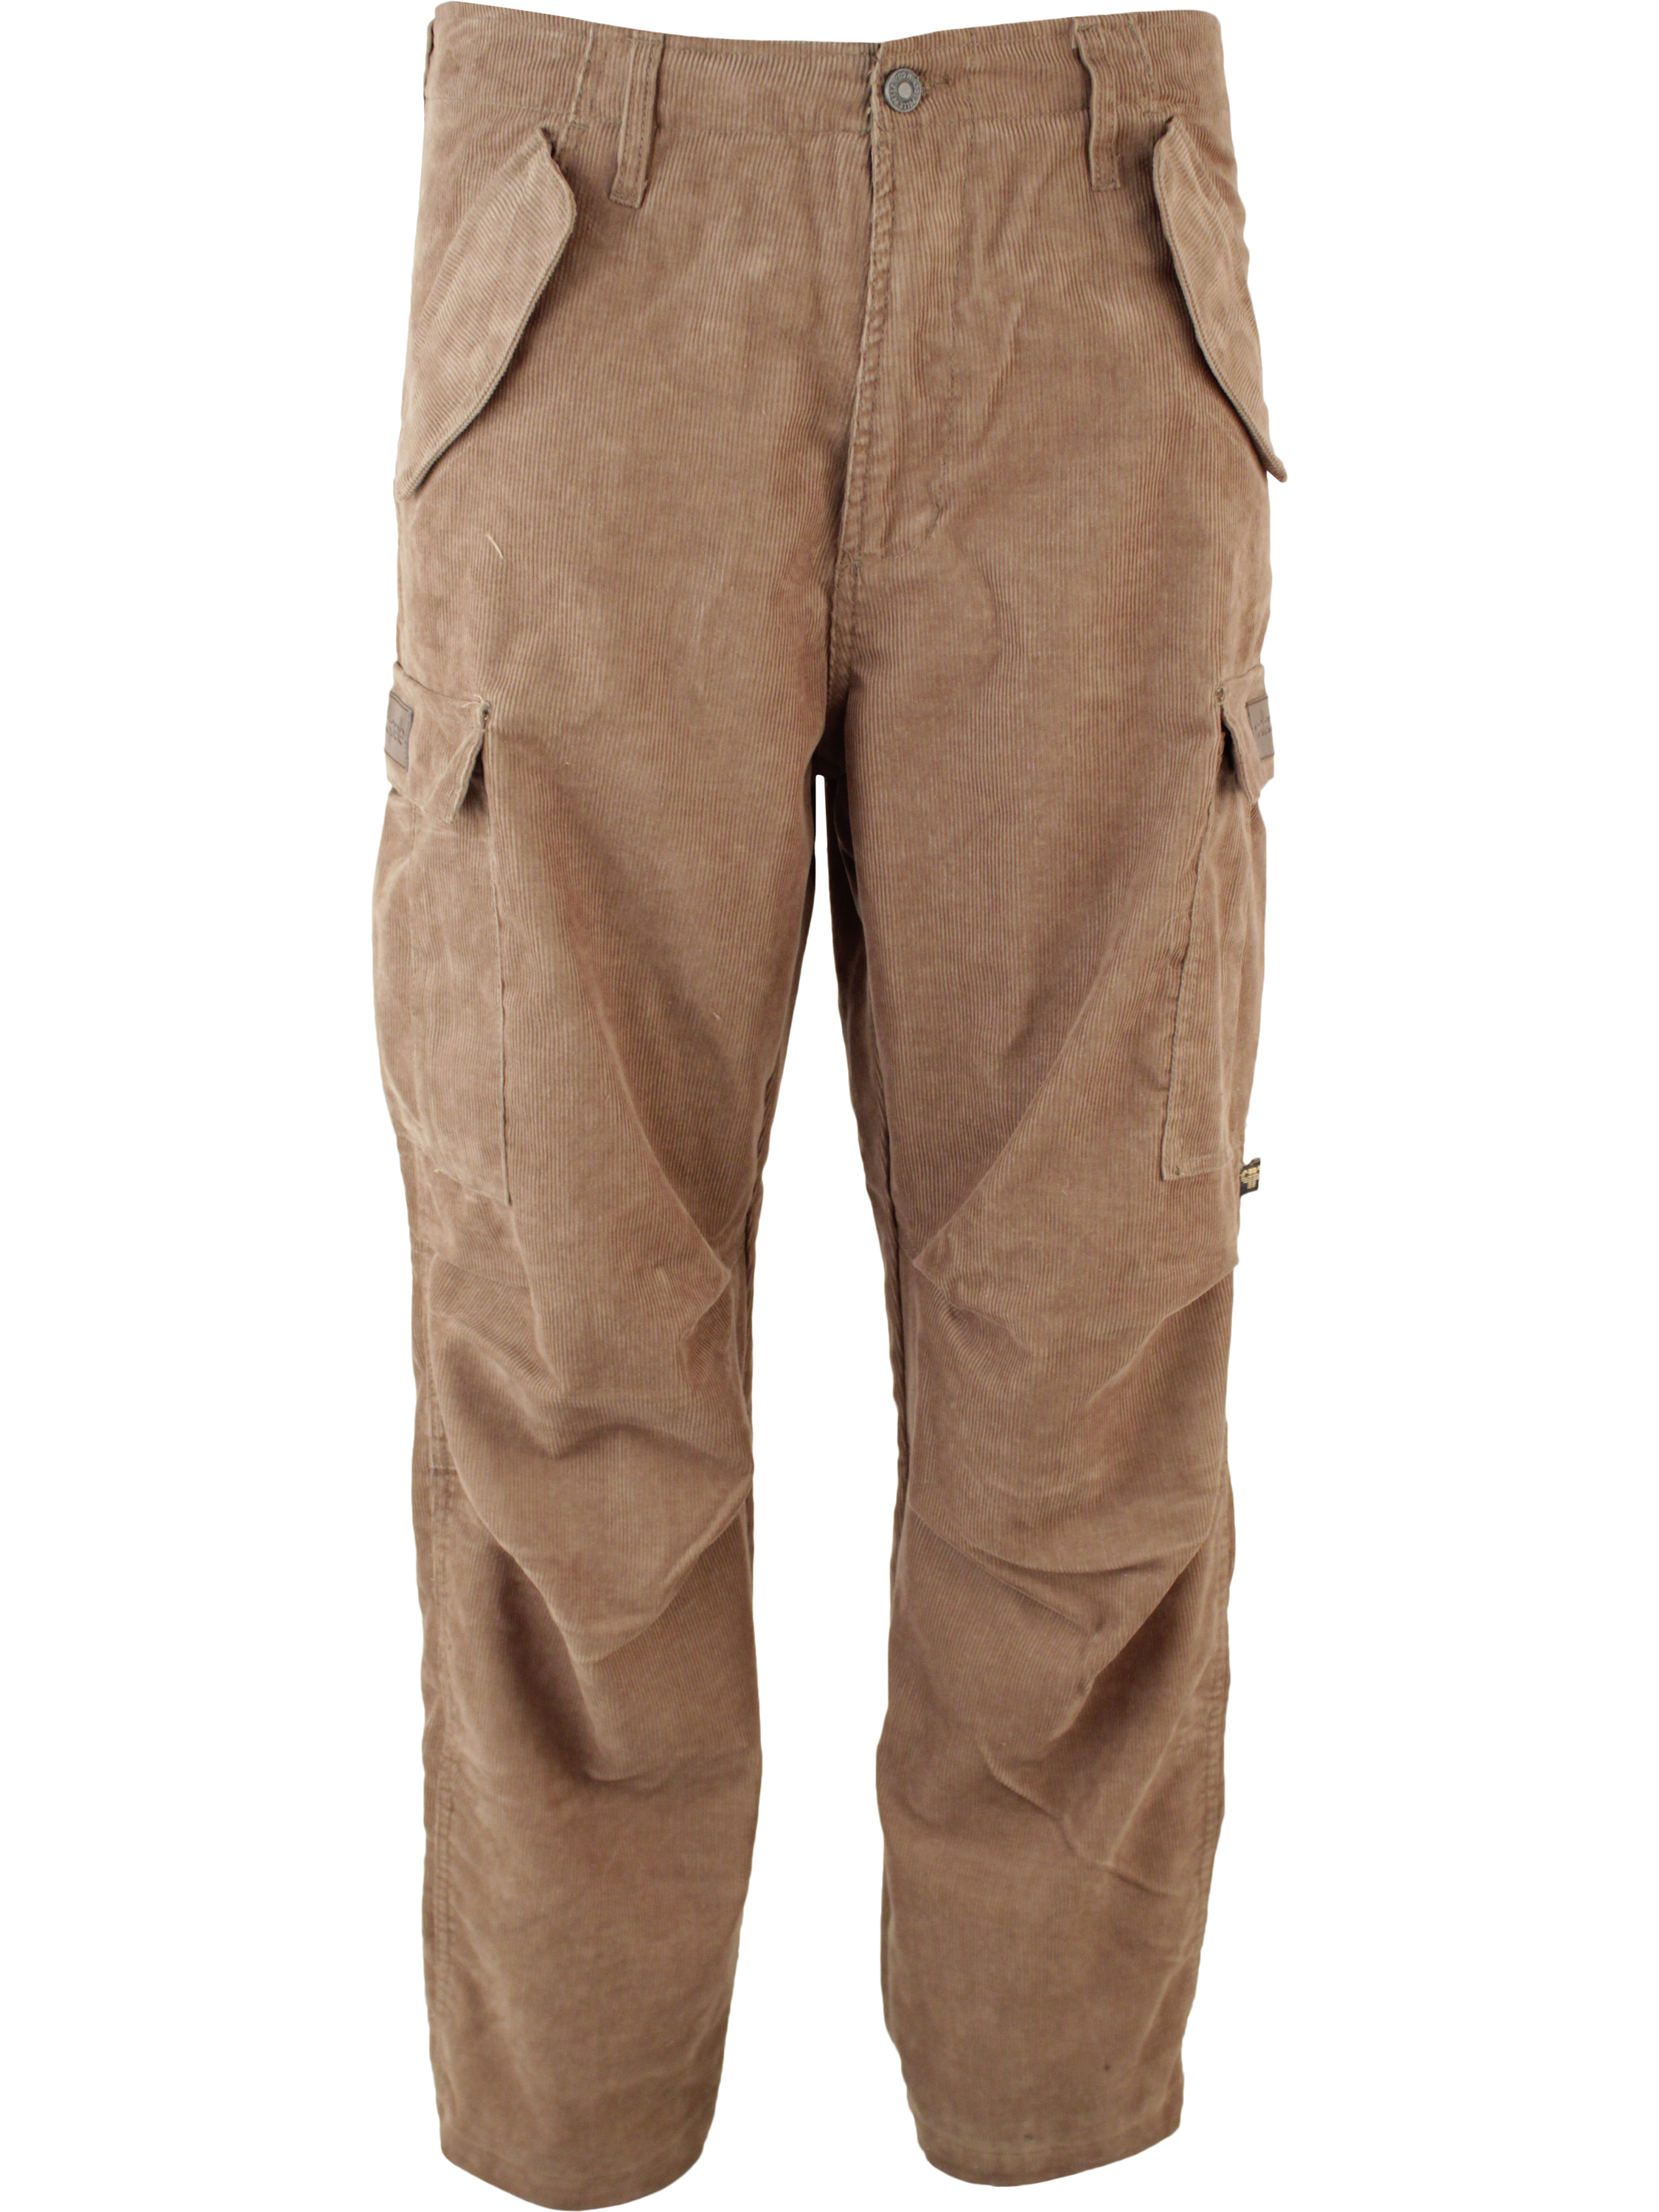 Pelle Pelle Limited Edition Corduroy Cargo Pants 